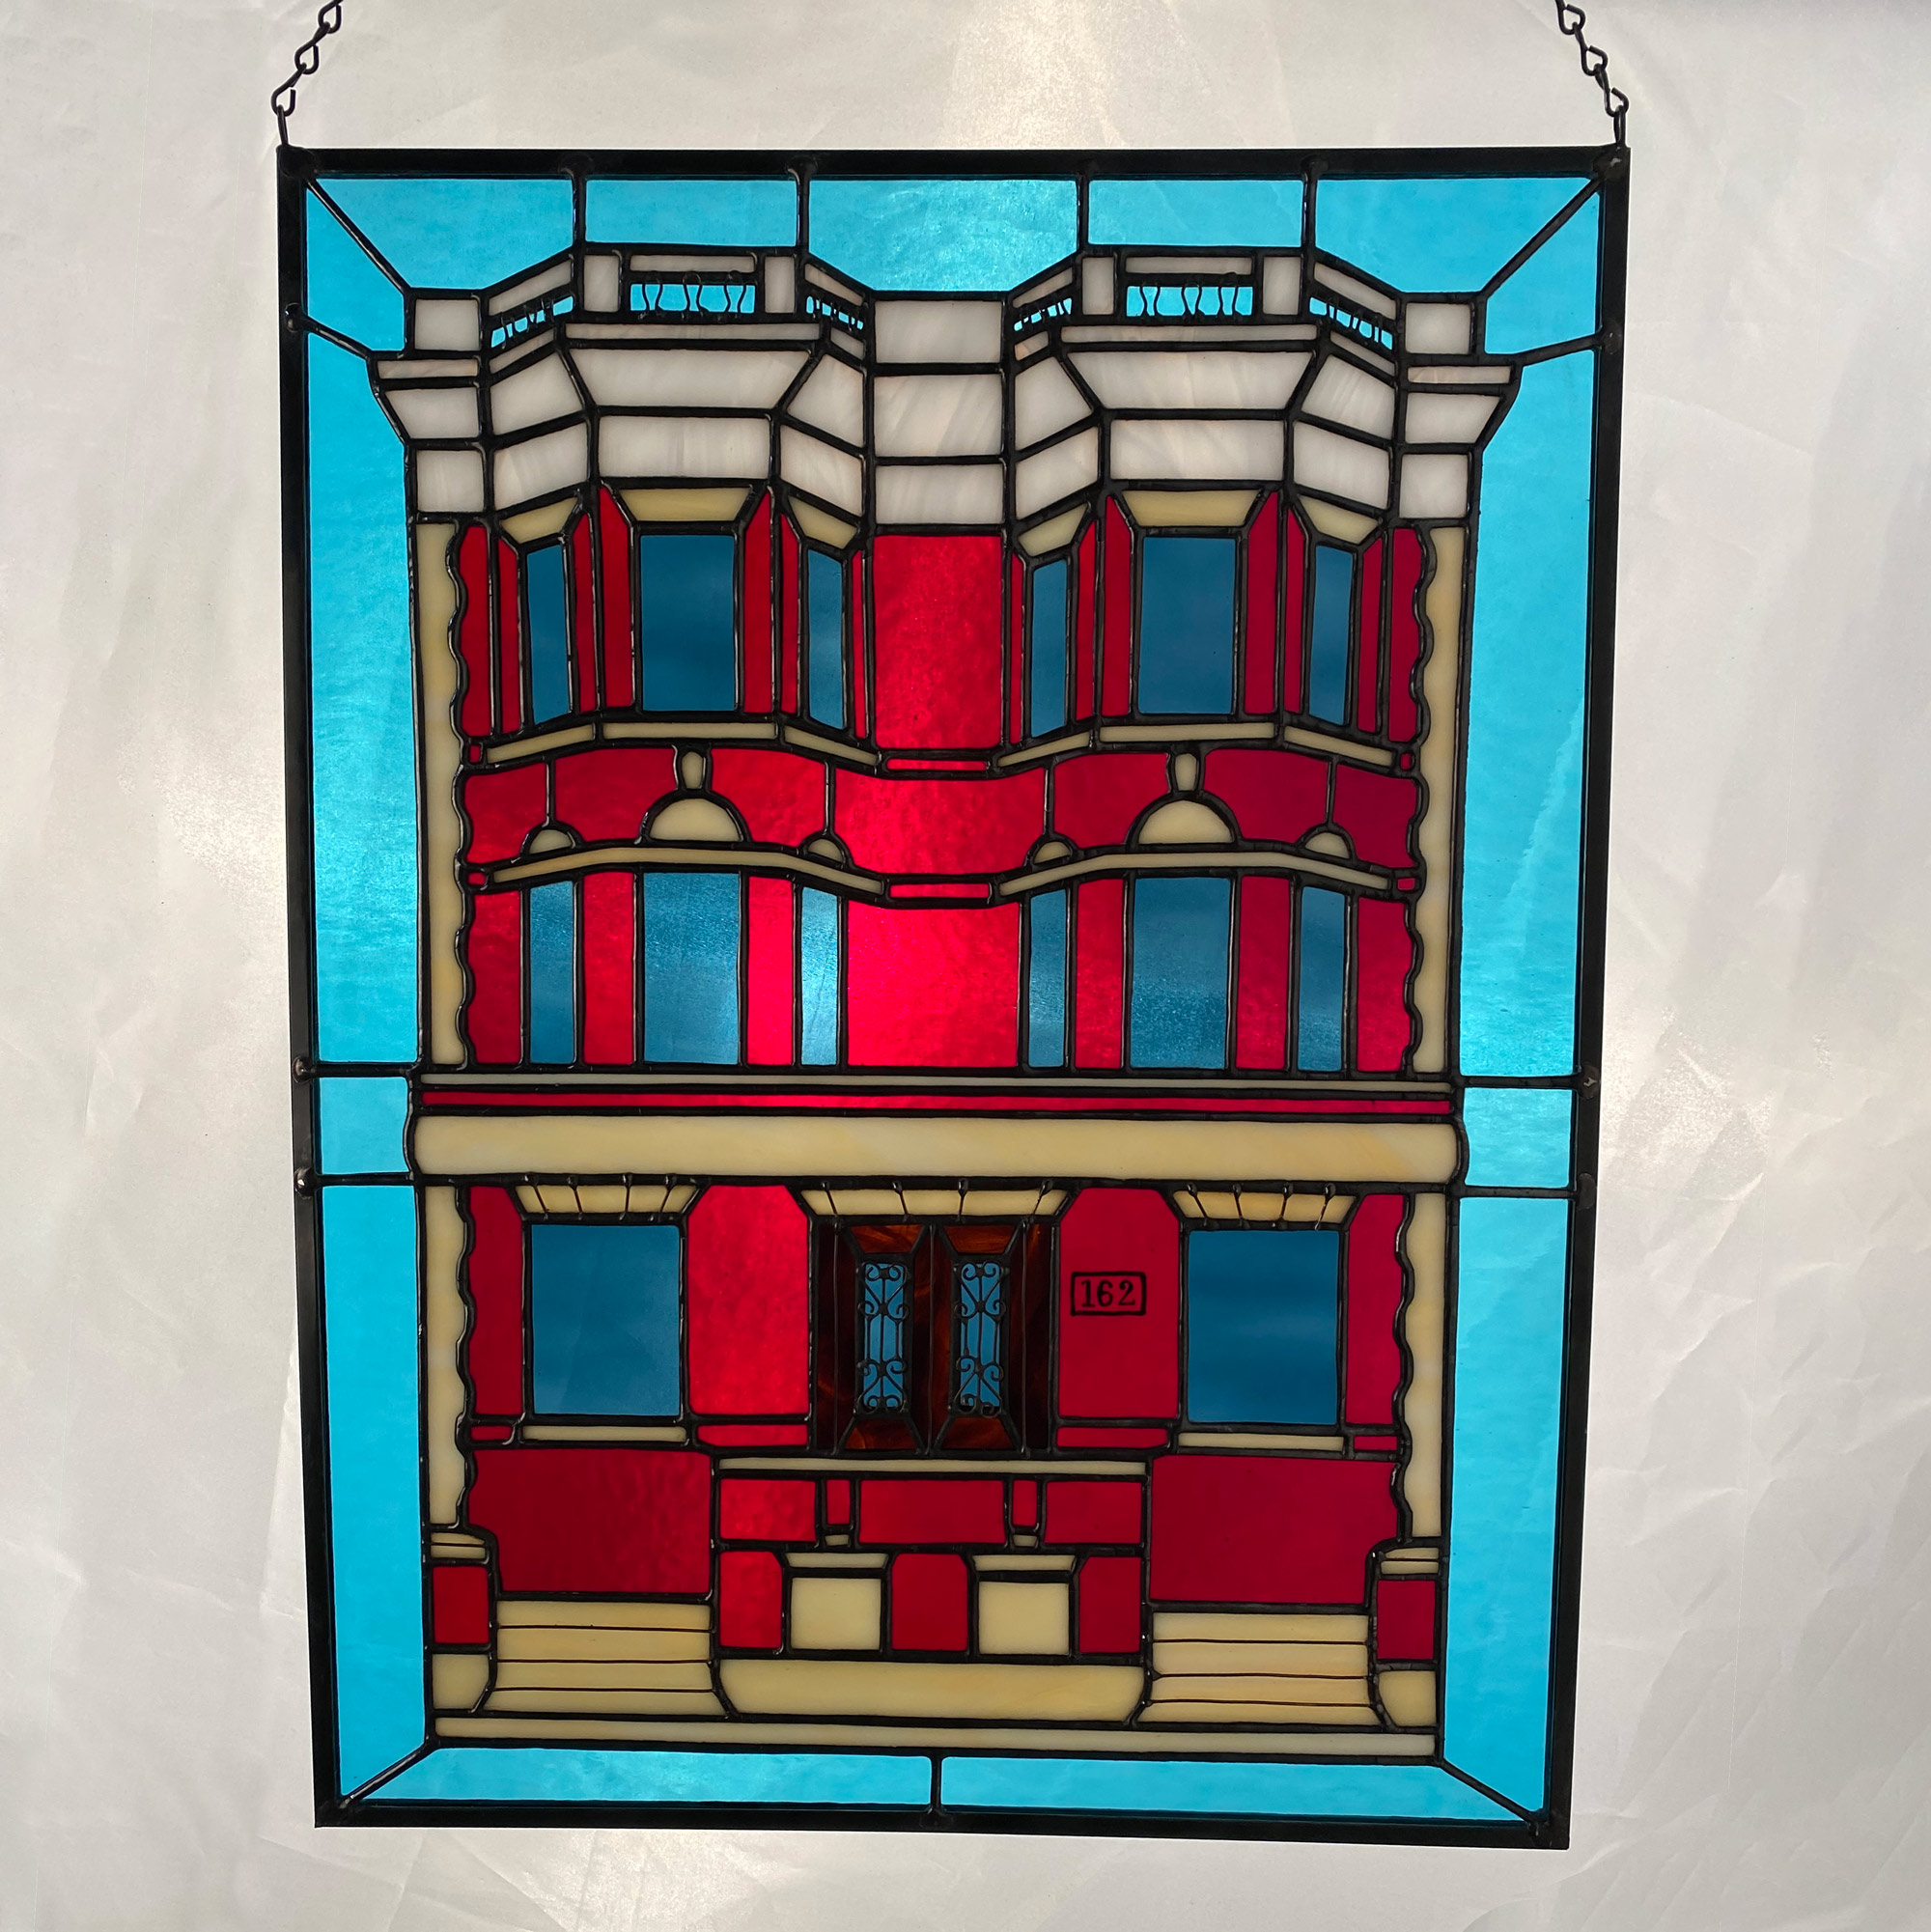 Misty Stained Glass - Building Portrait - 162 State St., Trenton, NJ